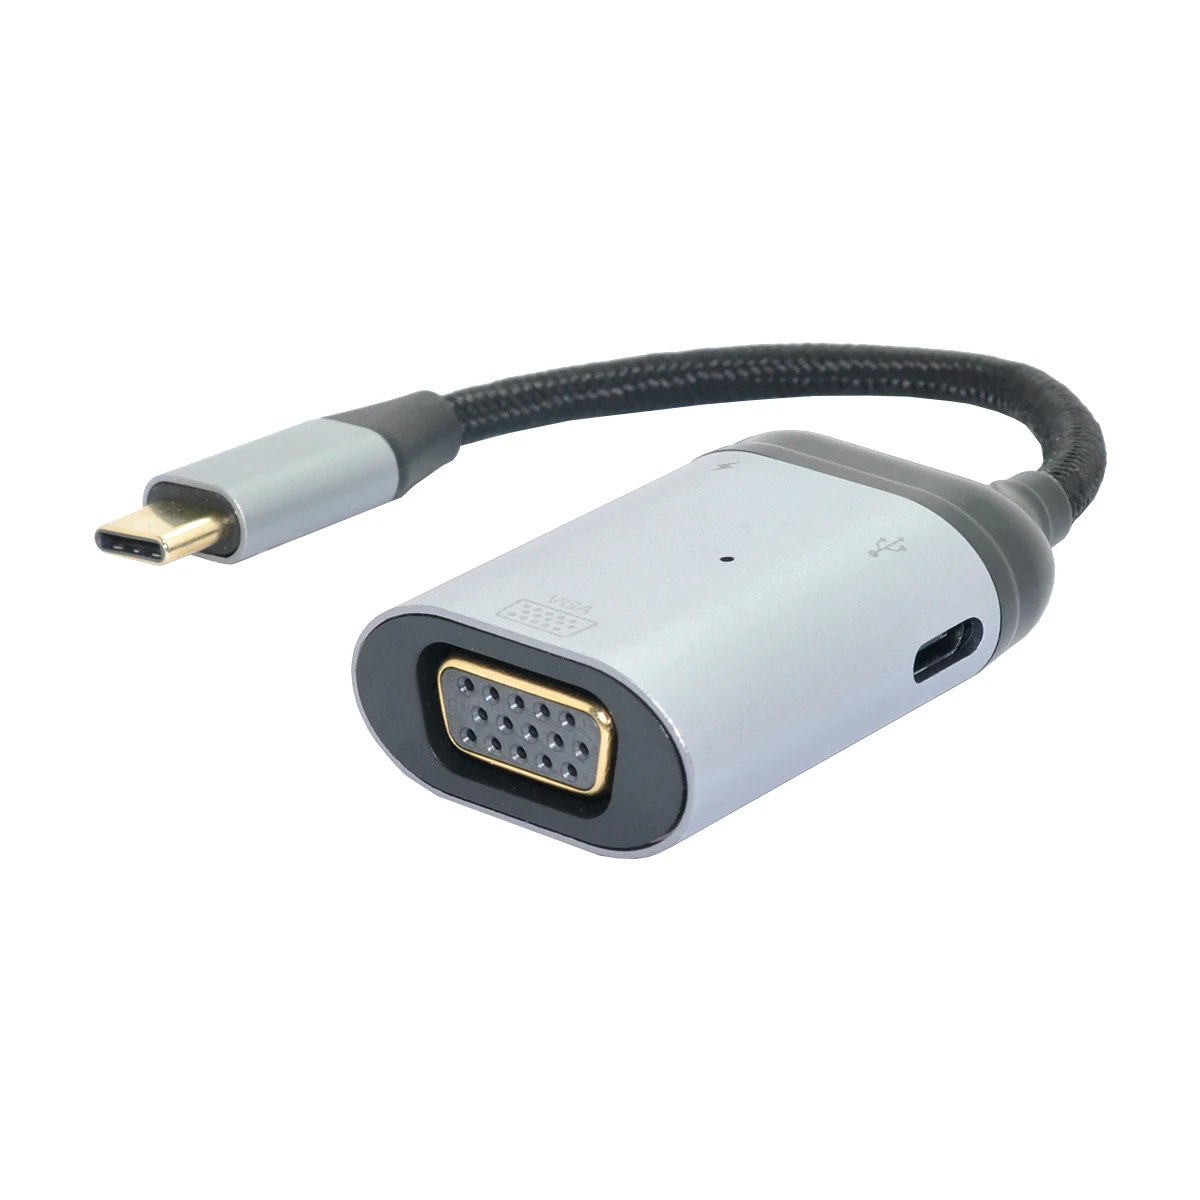 Buy qywo USB3.1 USB-C Type C to VGA RGB Converter HDTV Adapter 60hz 1080p with Female PD Power Port on